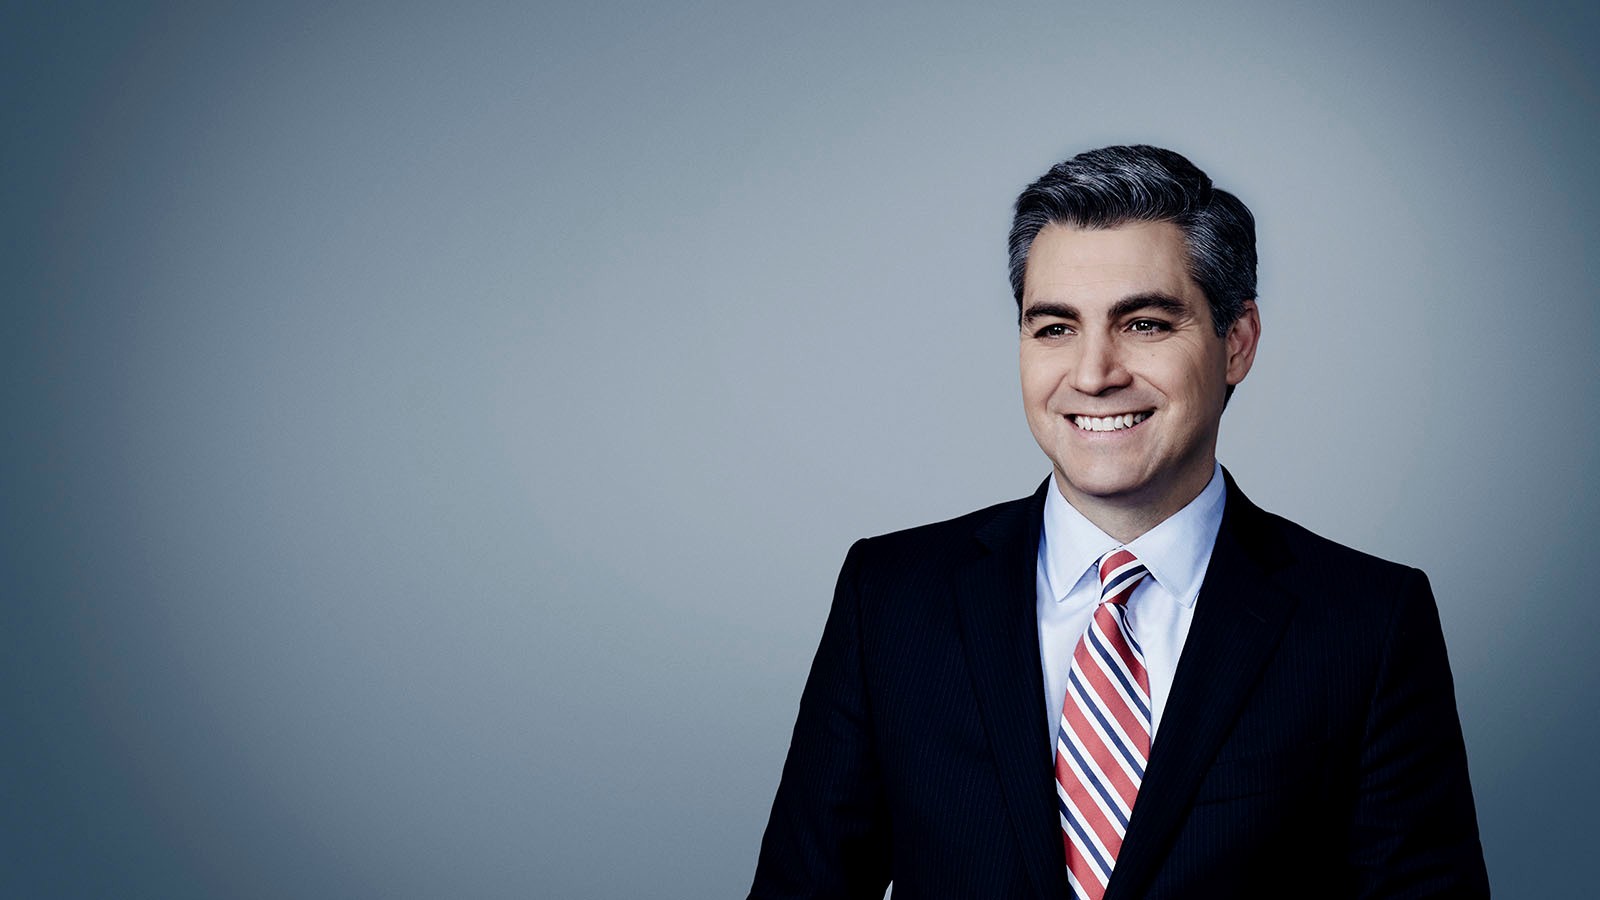 Cnn Profiles Jim Acosta Senior White House Correspondent Cnn